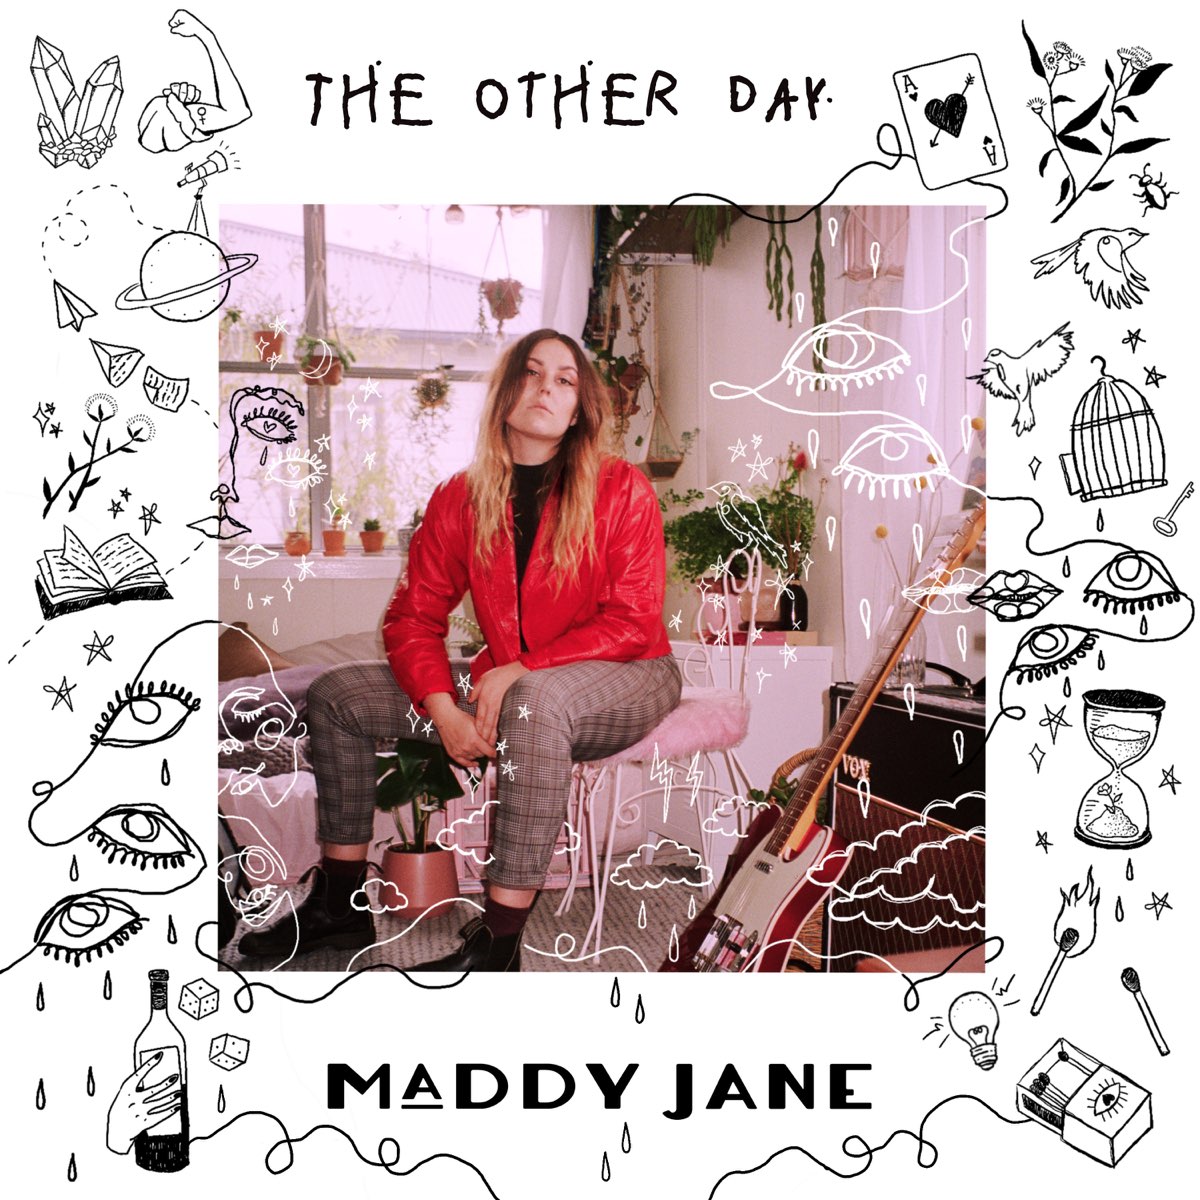 Мэдди Джейн. The other Day. Maddy Genets альбом. Plane Jane табак.